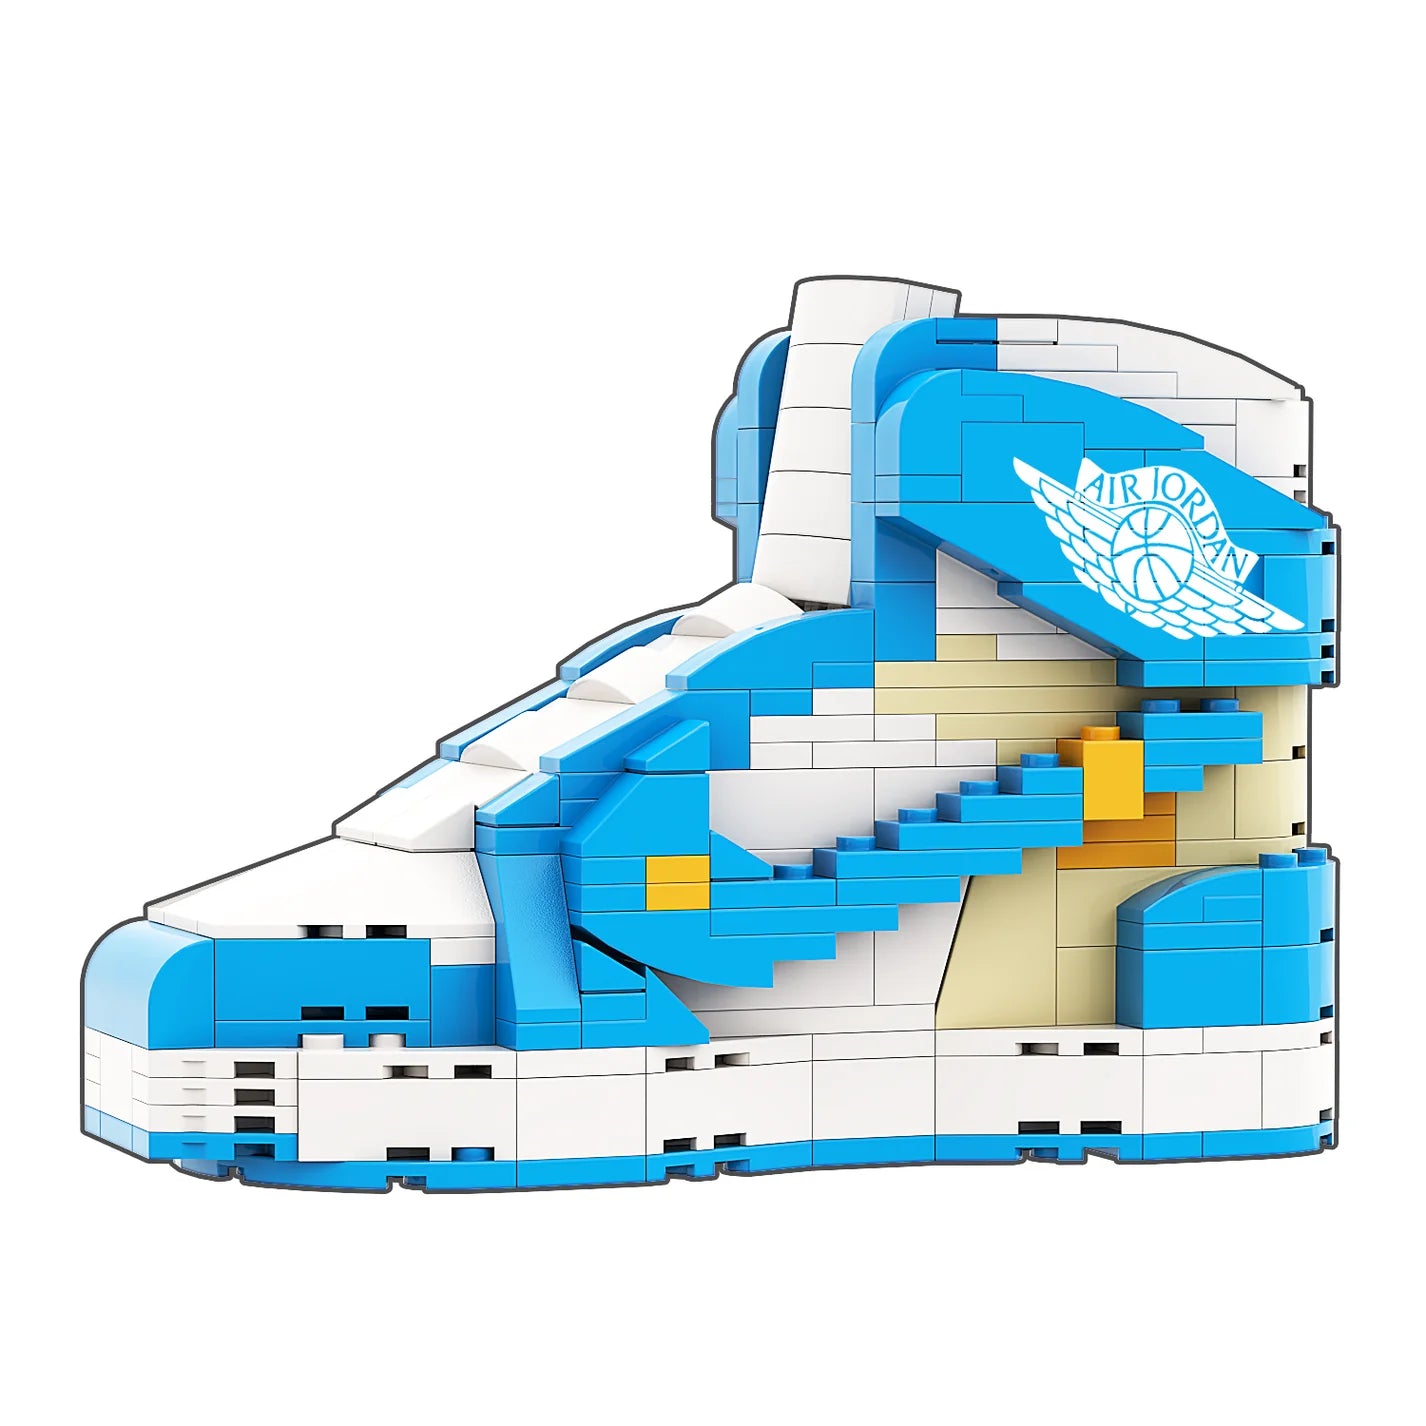 Sneaker Bricks Jordan 1 Off-White UNC Mini Figure